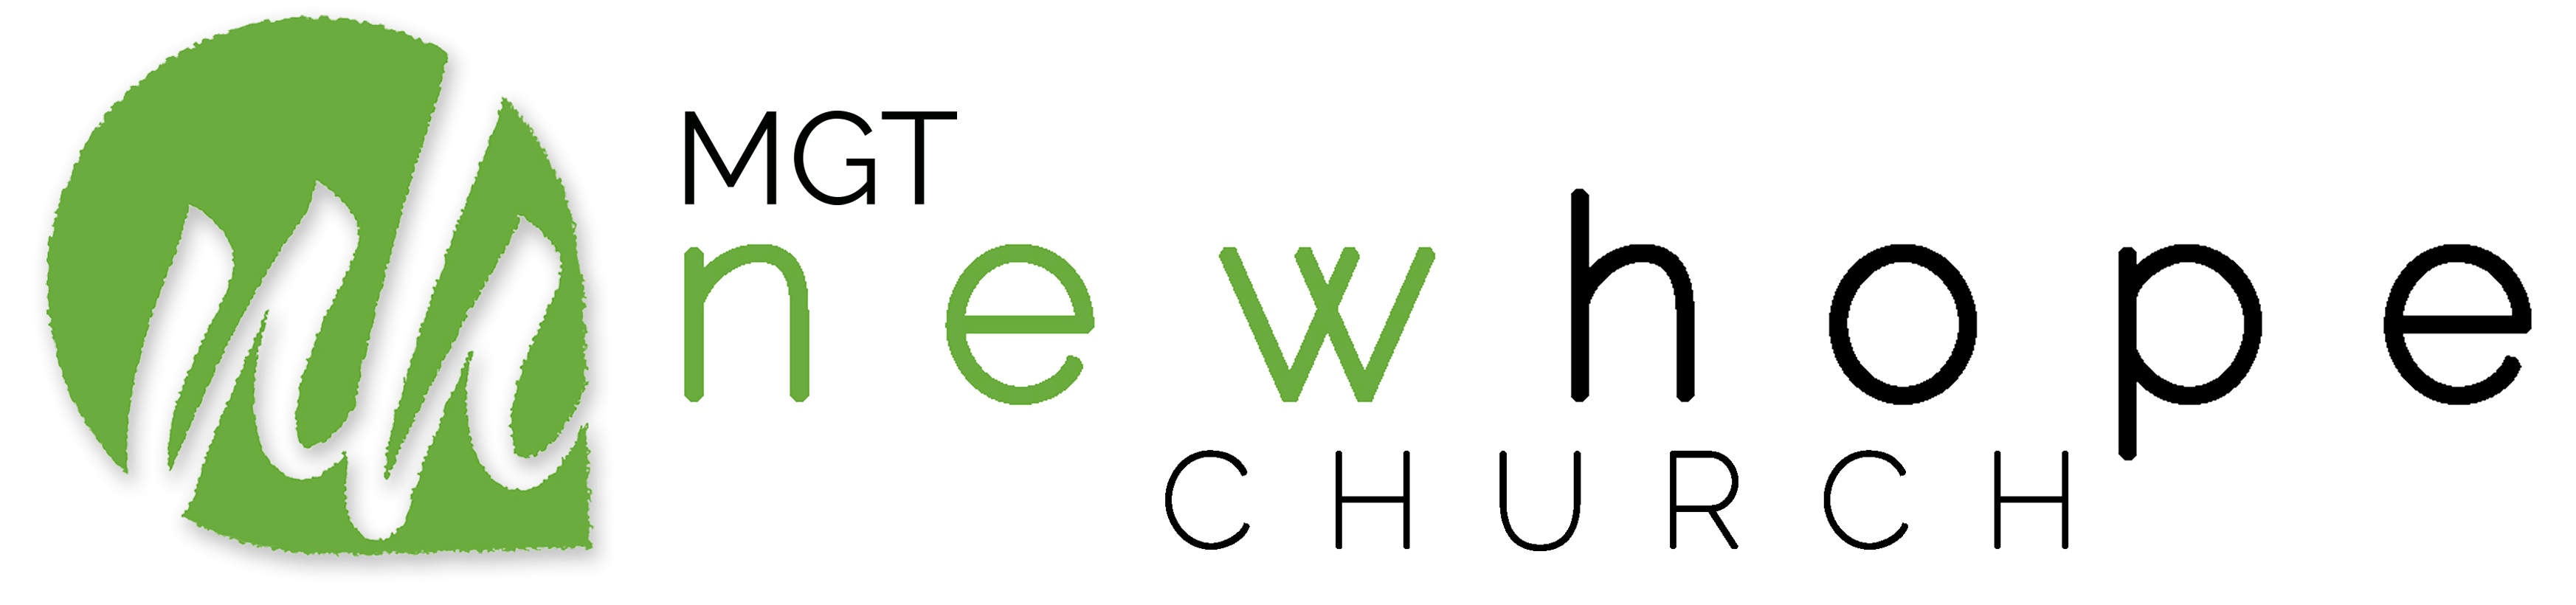 New Hope Logo - MGT New Hope Church | A fellowship of faith hope and love.